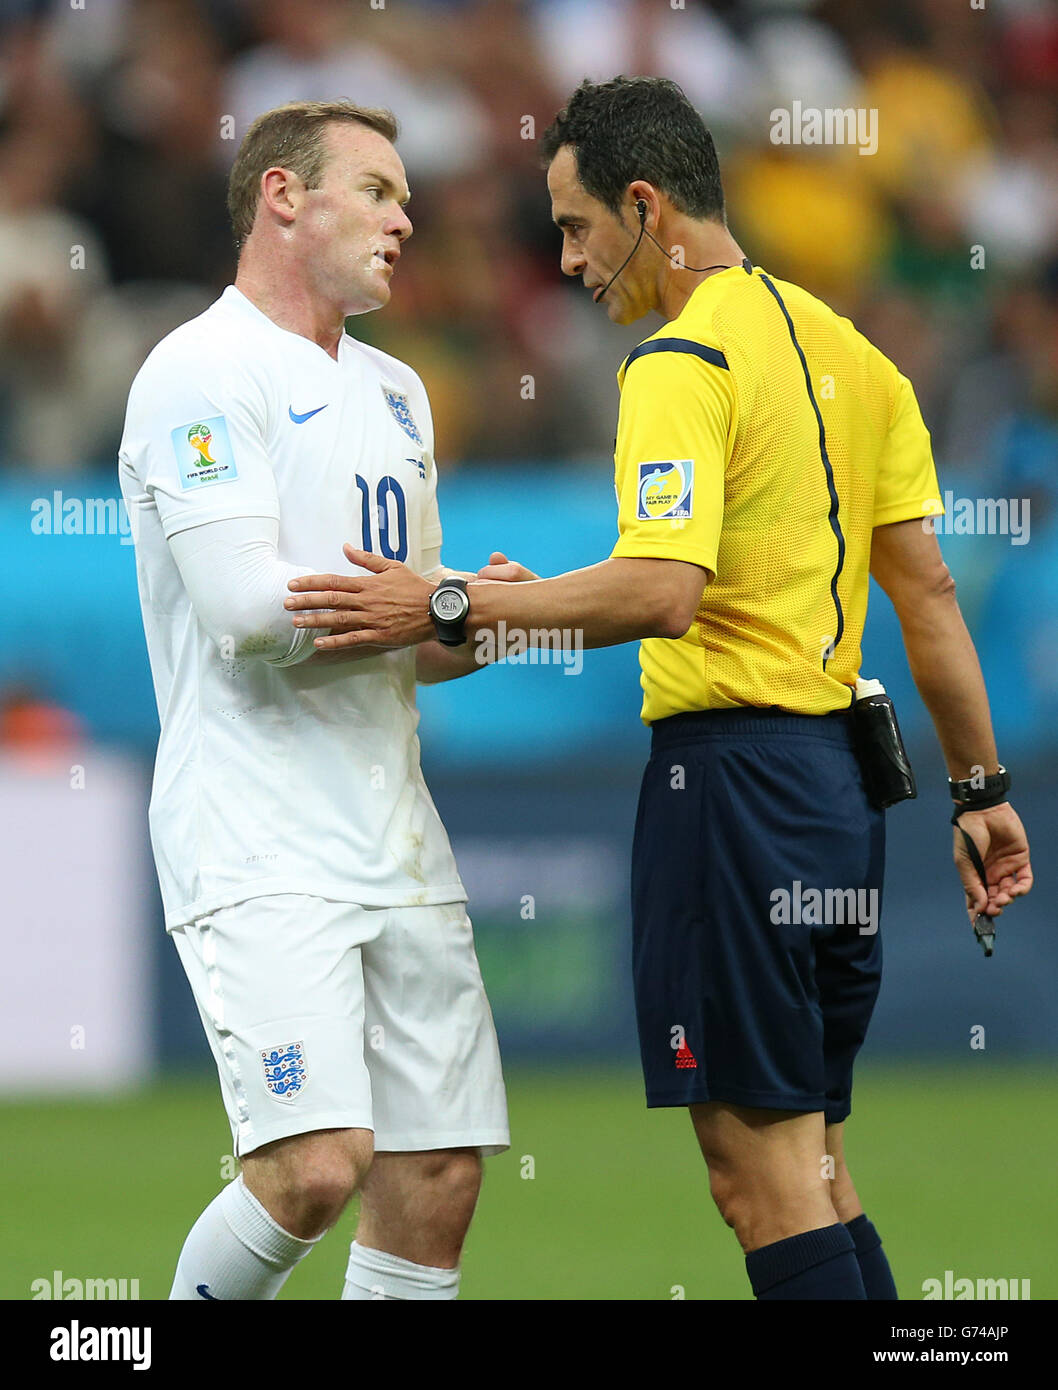 England's Wayne Rooney speaks with referee Carlos Velasco Carballo during the Group D match the Estadio do Sao Paulo, Sao Paulo, Brazil. Stock Photo